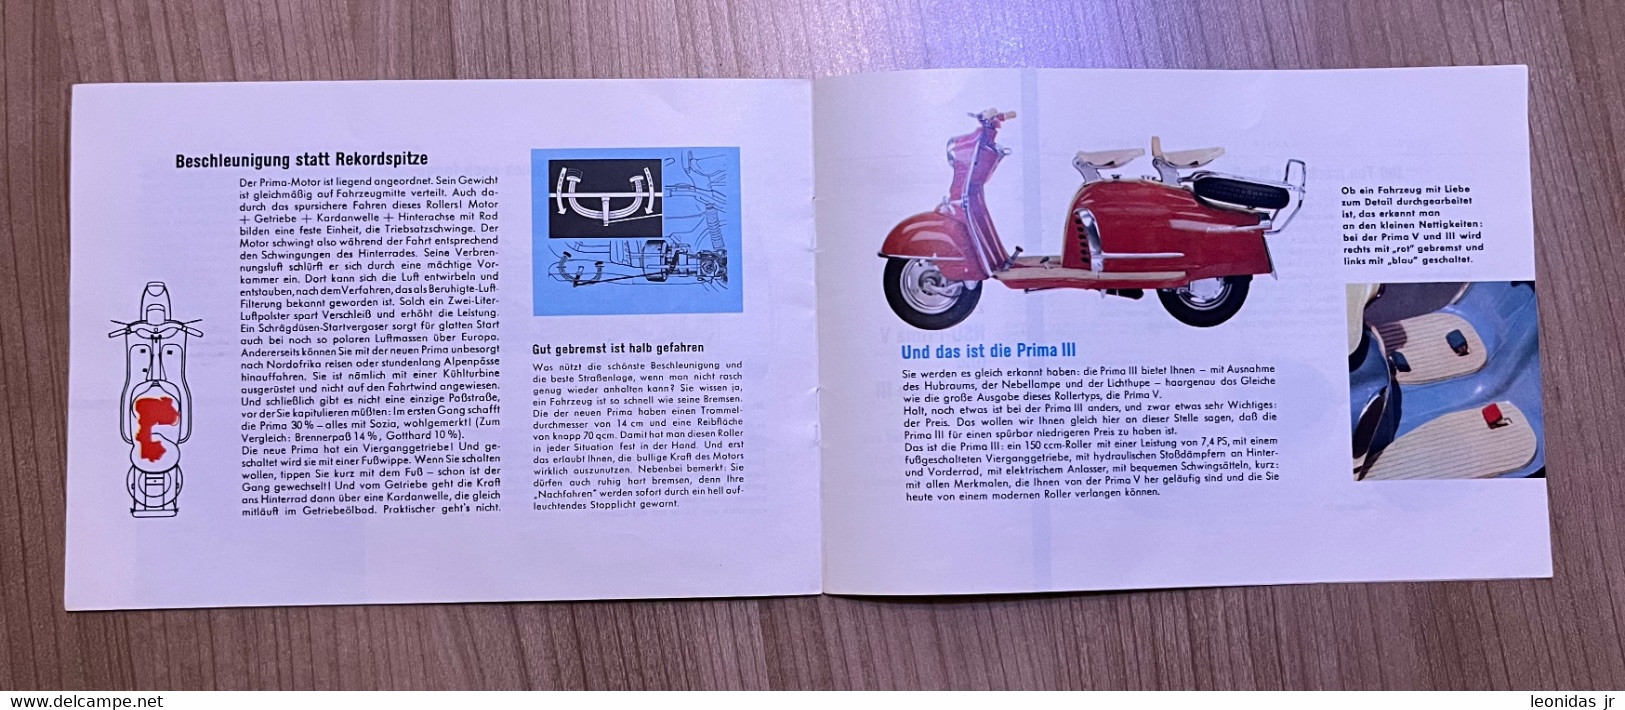 Deutschlands Meistgekaufter Motorroller - Catalogue - Kataloge